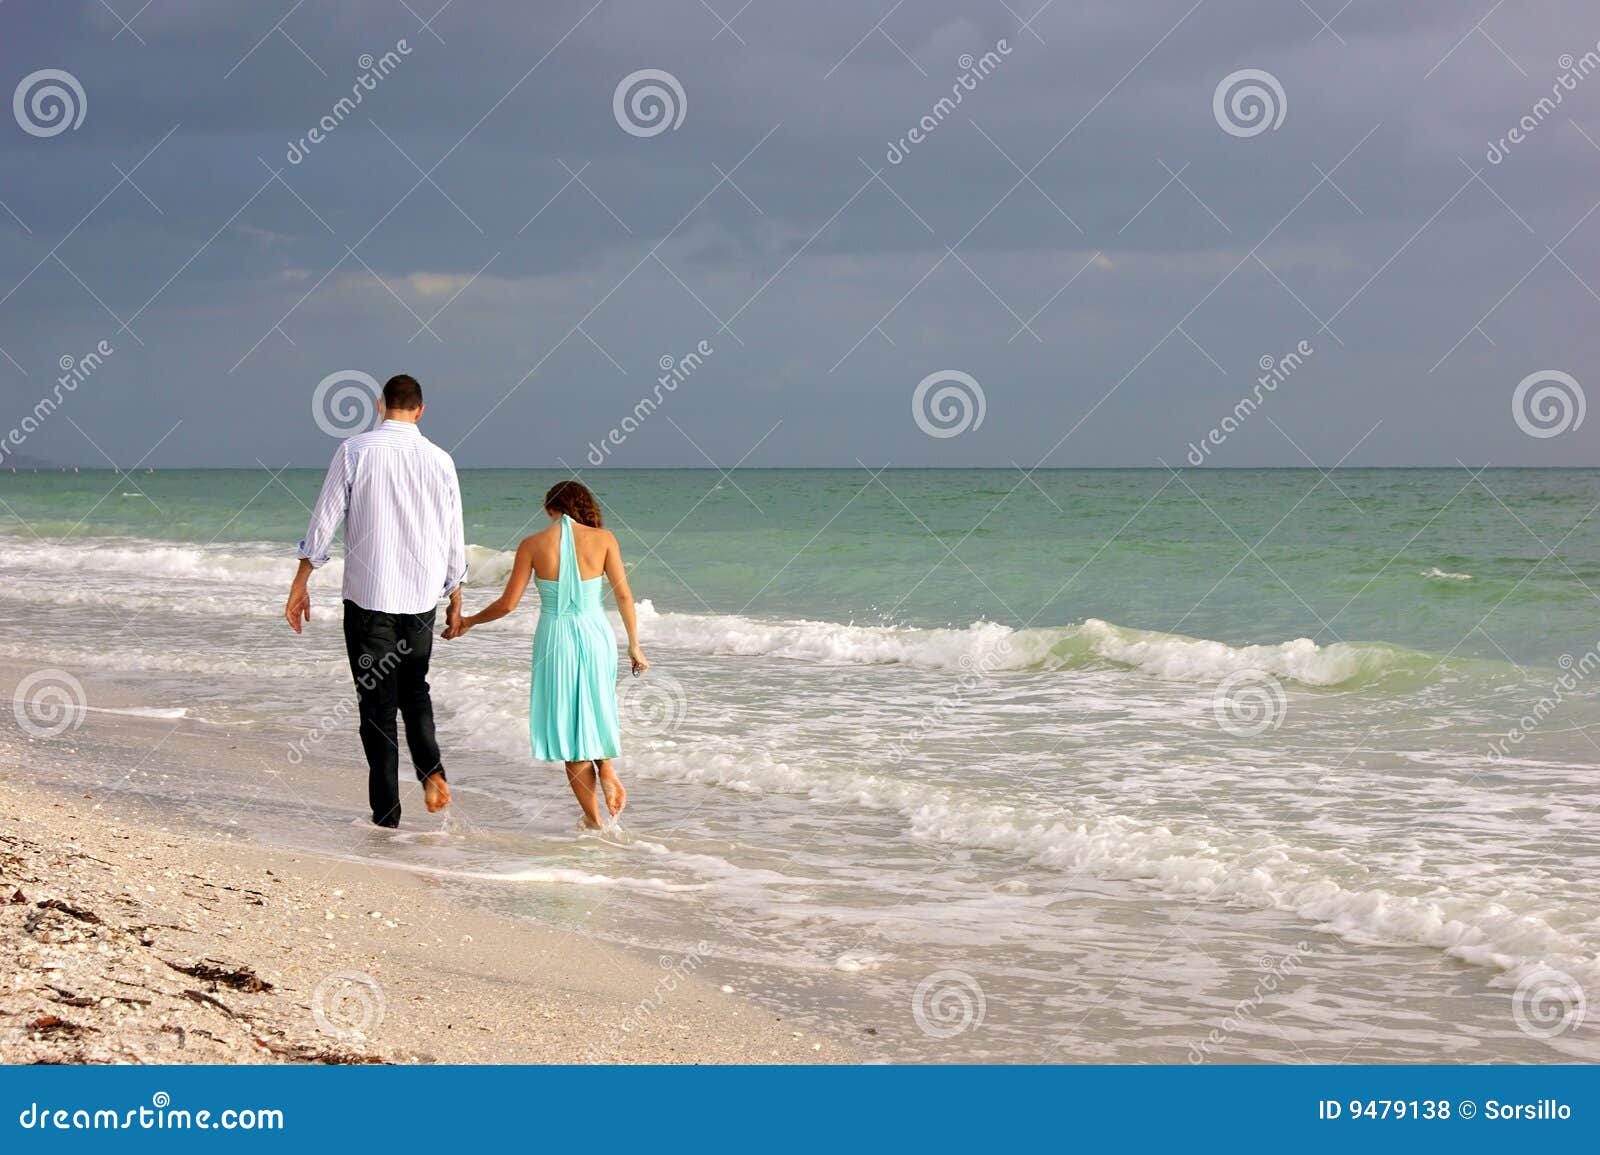 young couple walking along bonita beach as sunsets